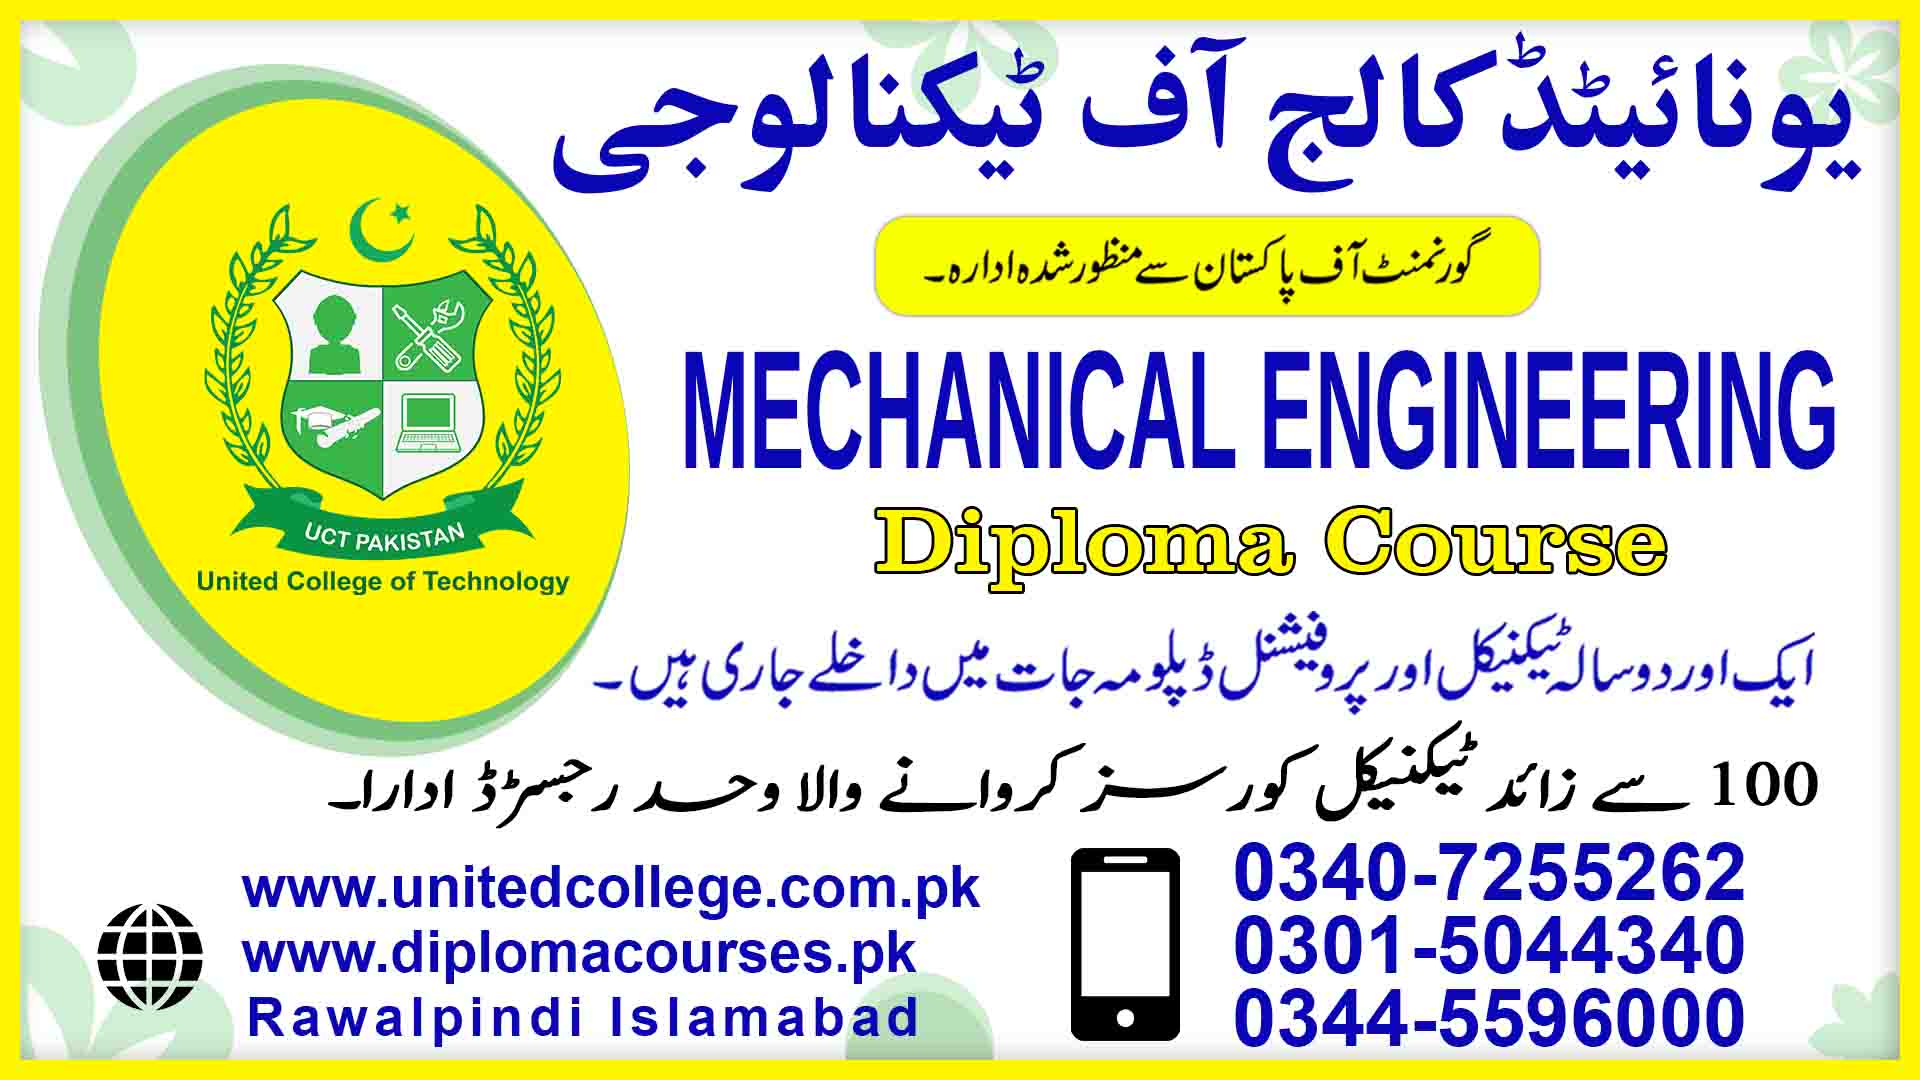 MECHANICAL ENGINEERING COURSE IN RAWALPINDI ISLAMABAD PAKISTAN